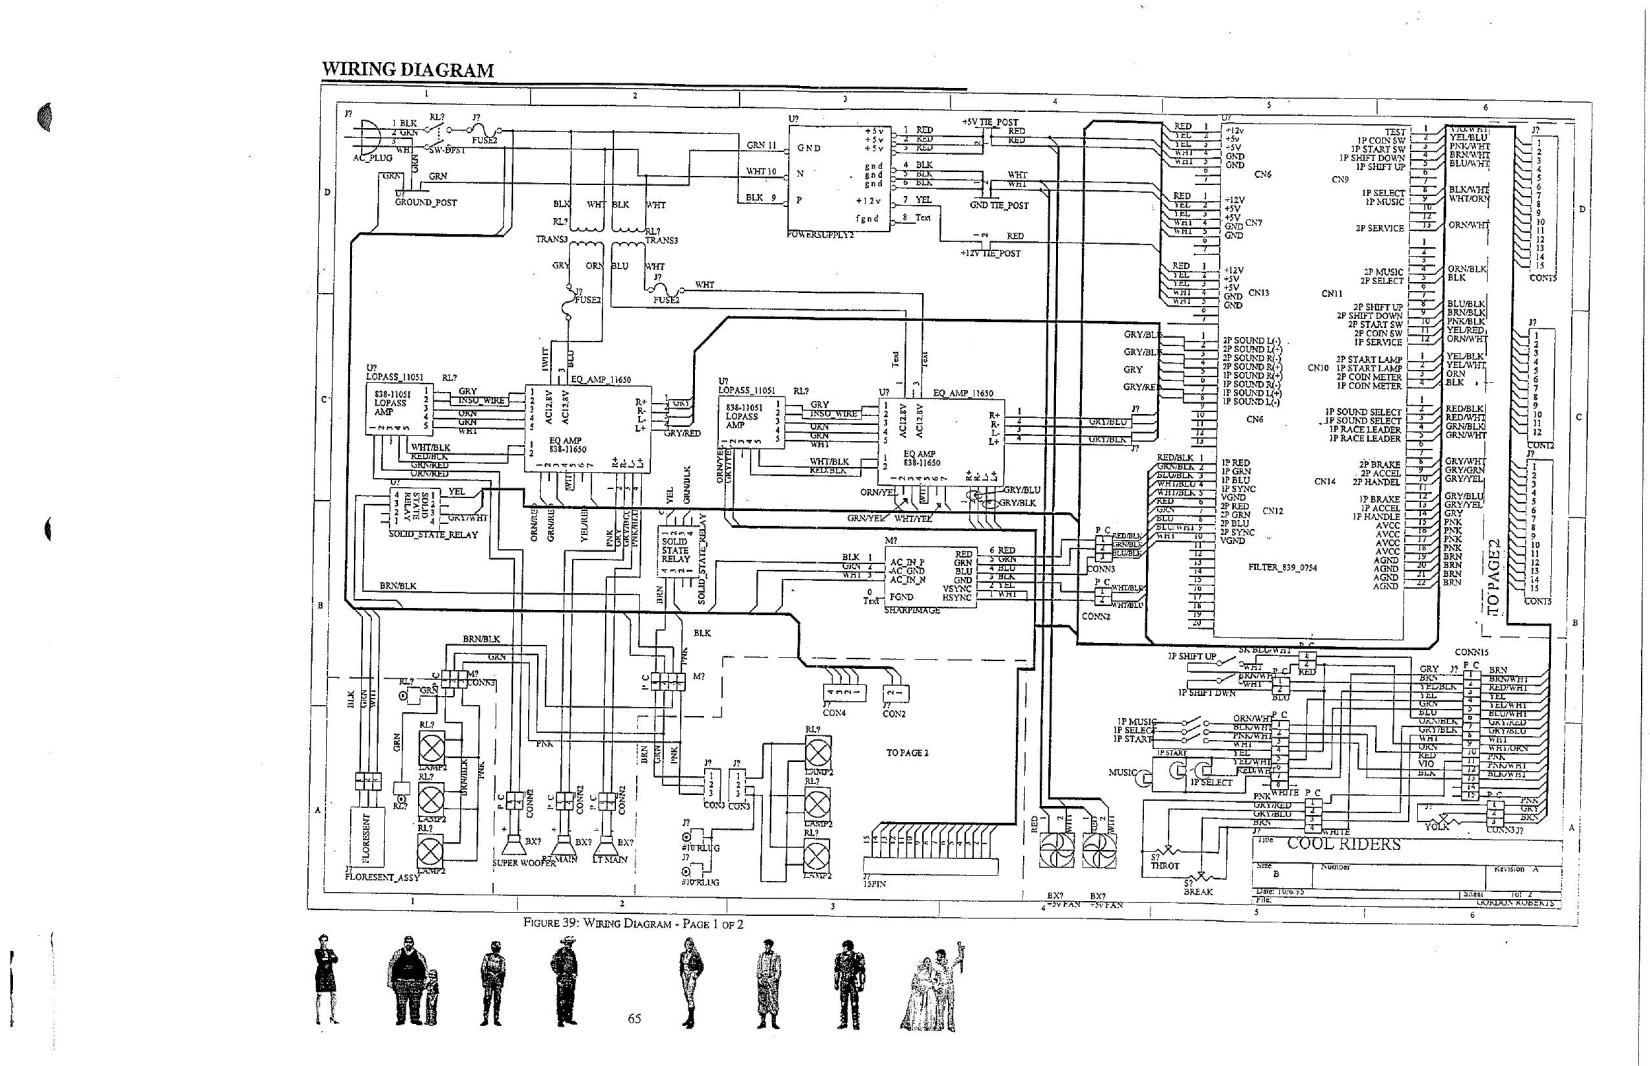 Cabinet wiring diagram